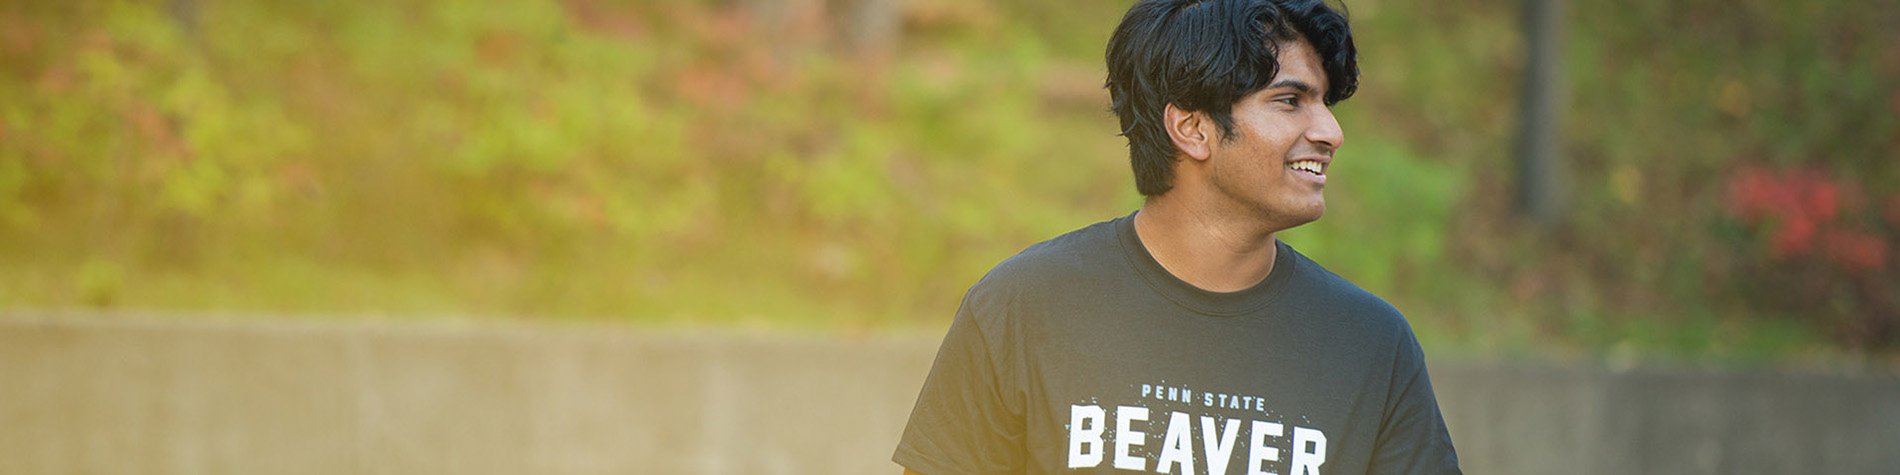 A male student outside wearing a Penn State Beaver t-shirt.